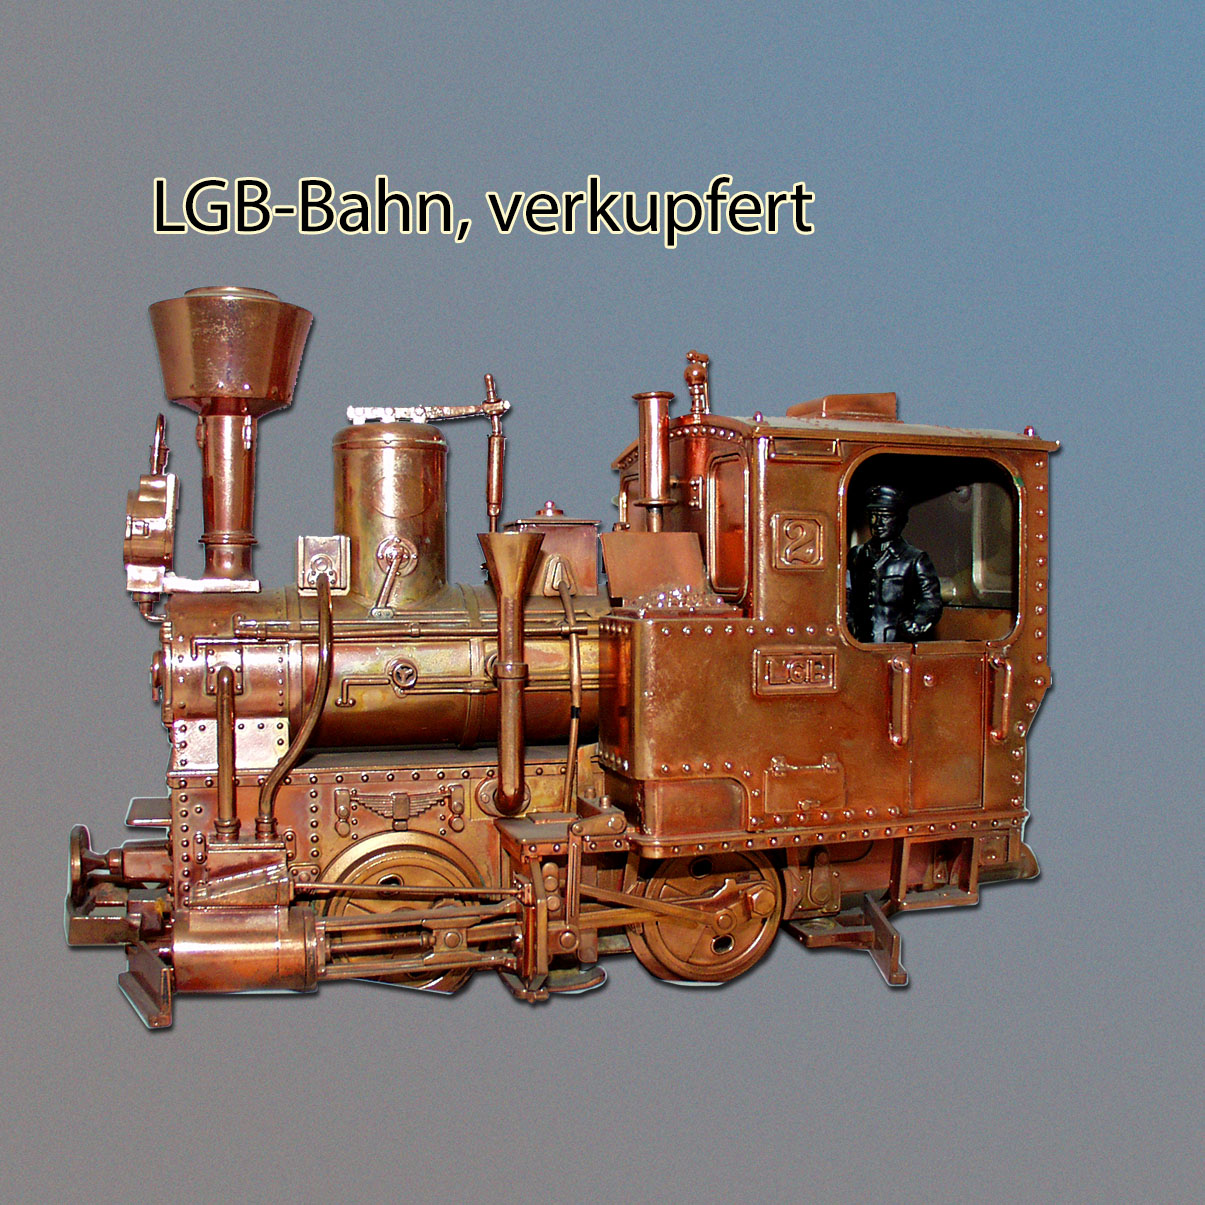 LGB Bahn Lokomotive, verkupfert